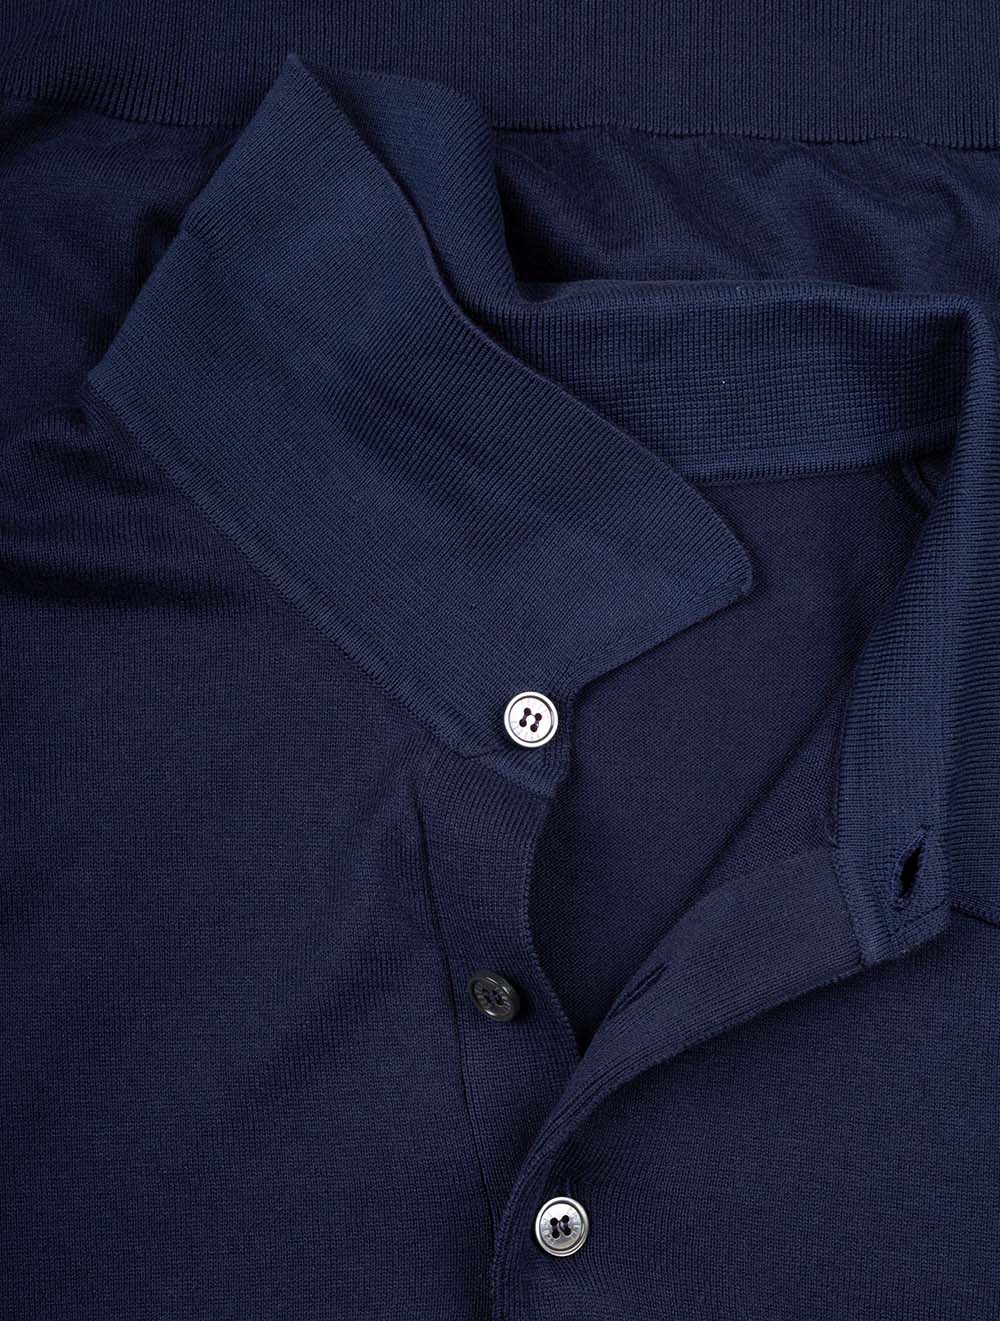 Sportman Polo Shirt Short Sleeve Navy